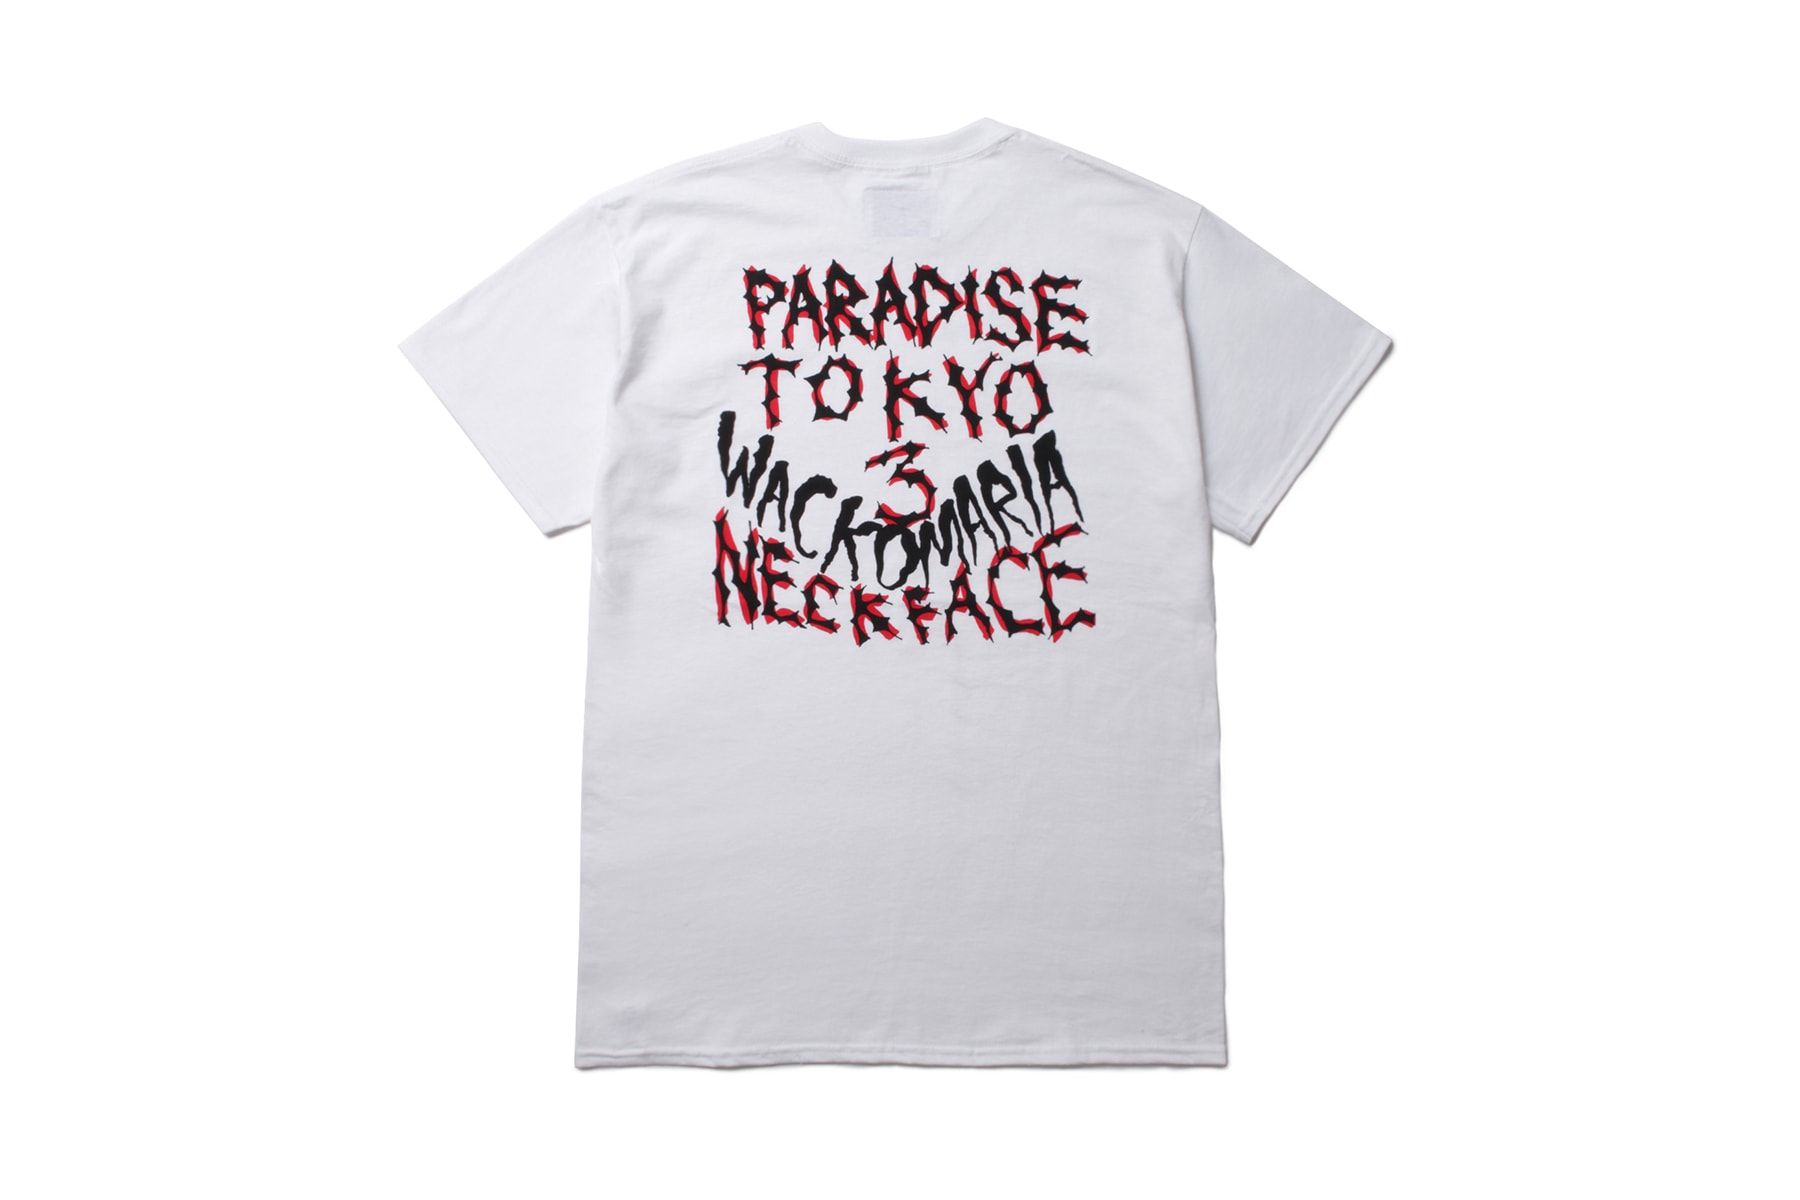 PARADISE TOKYO 3周年を記念する WACKO MARIA x NECK FACE による最新コラボアイテムの数々が登場 パラダイストーキョー ワコマリア ネックフェイス HYPEBEAST ハイプビースト